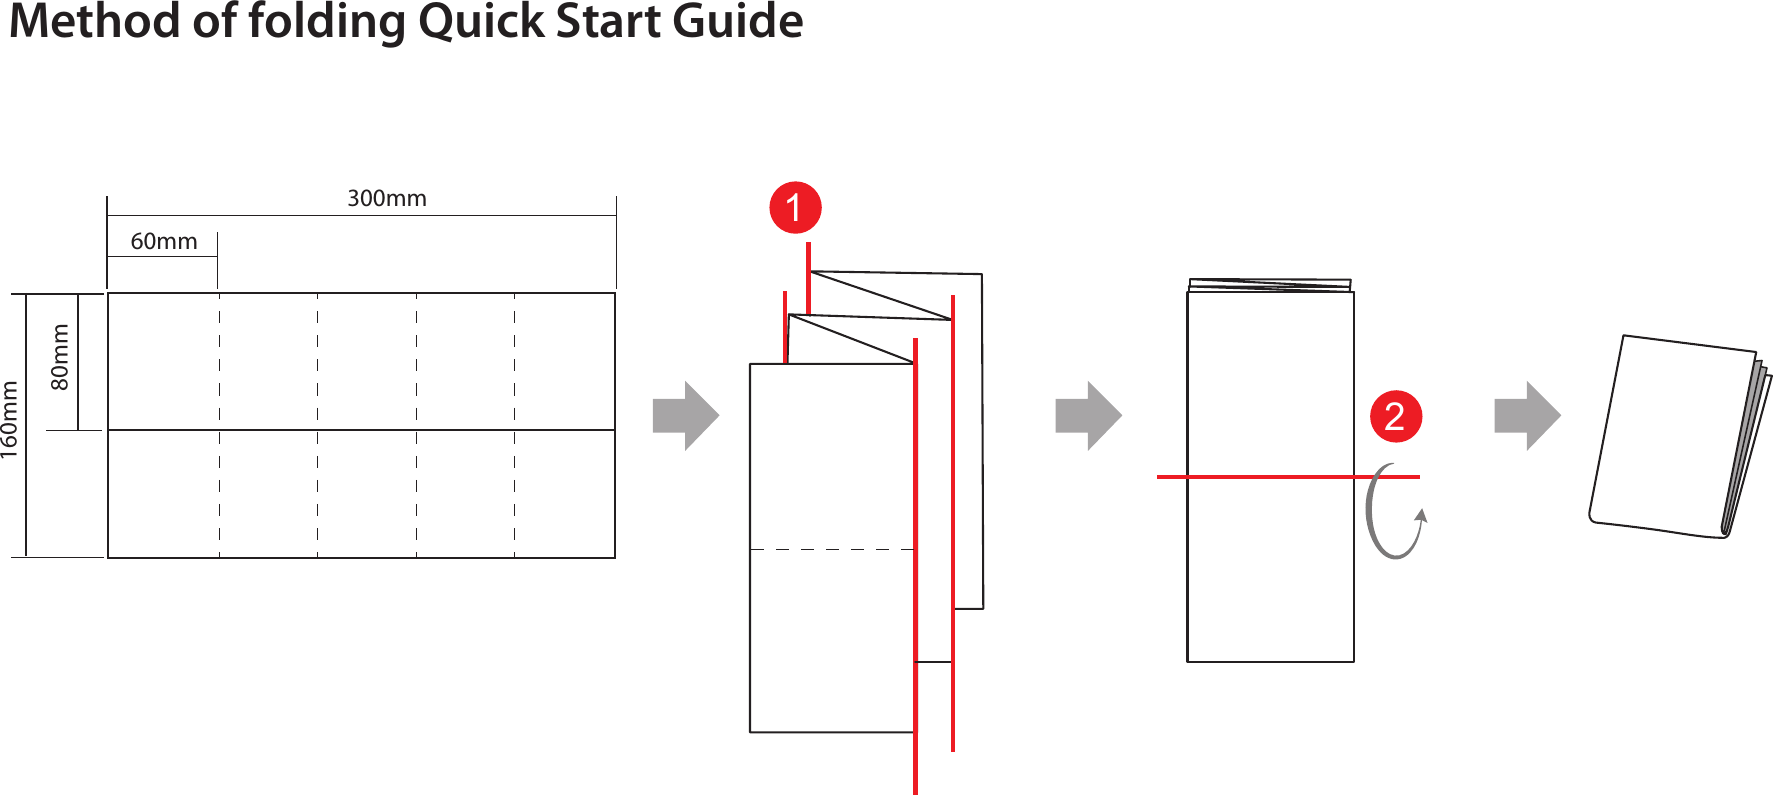 Method of folding Quick Start Guide12300mm60mm80mm160mm